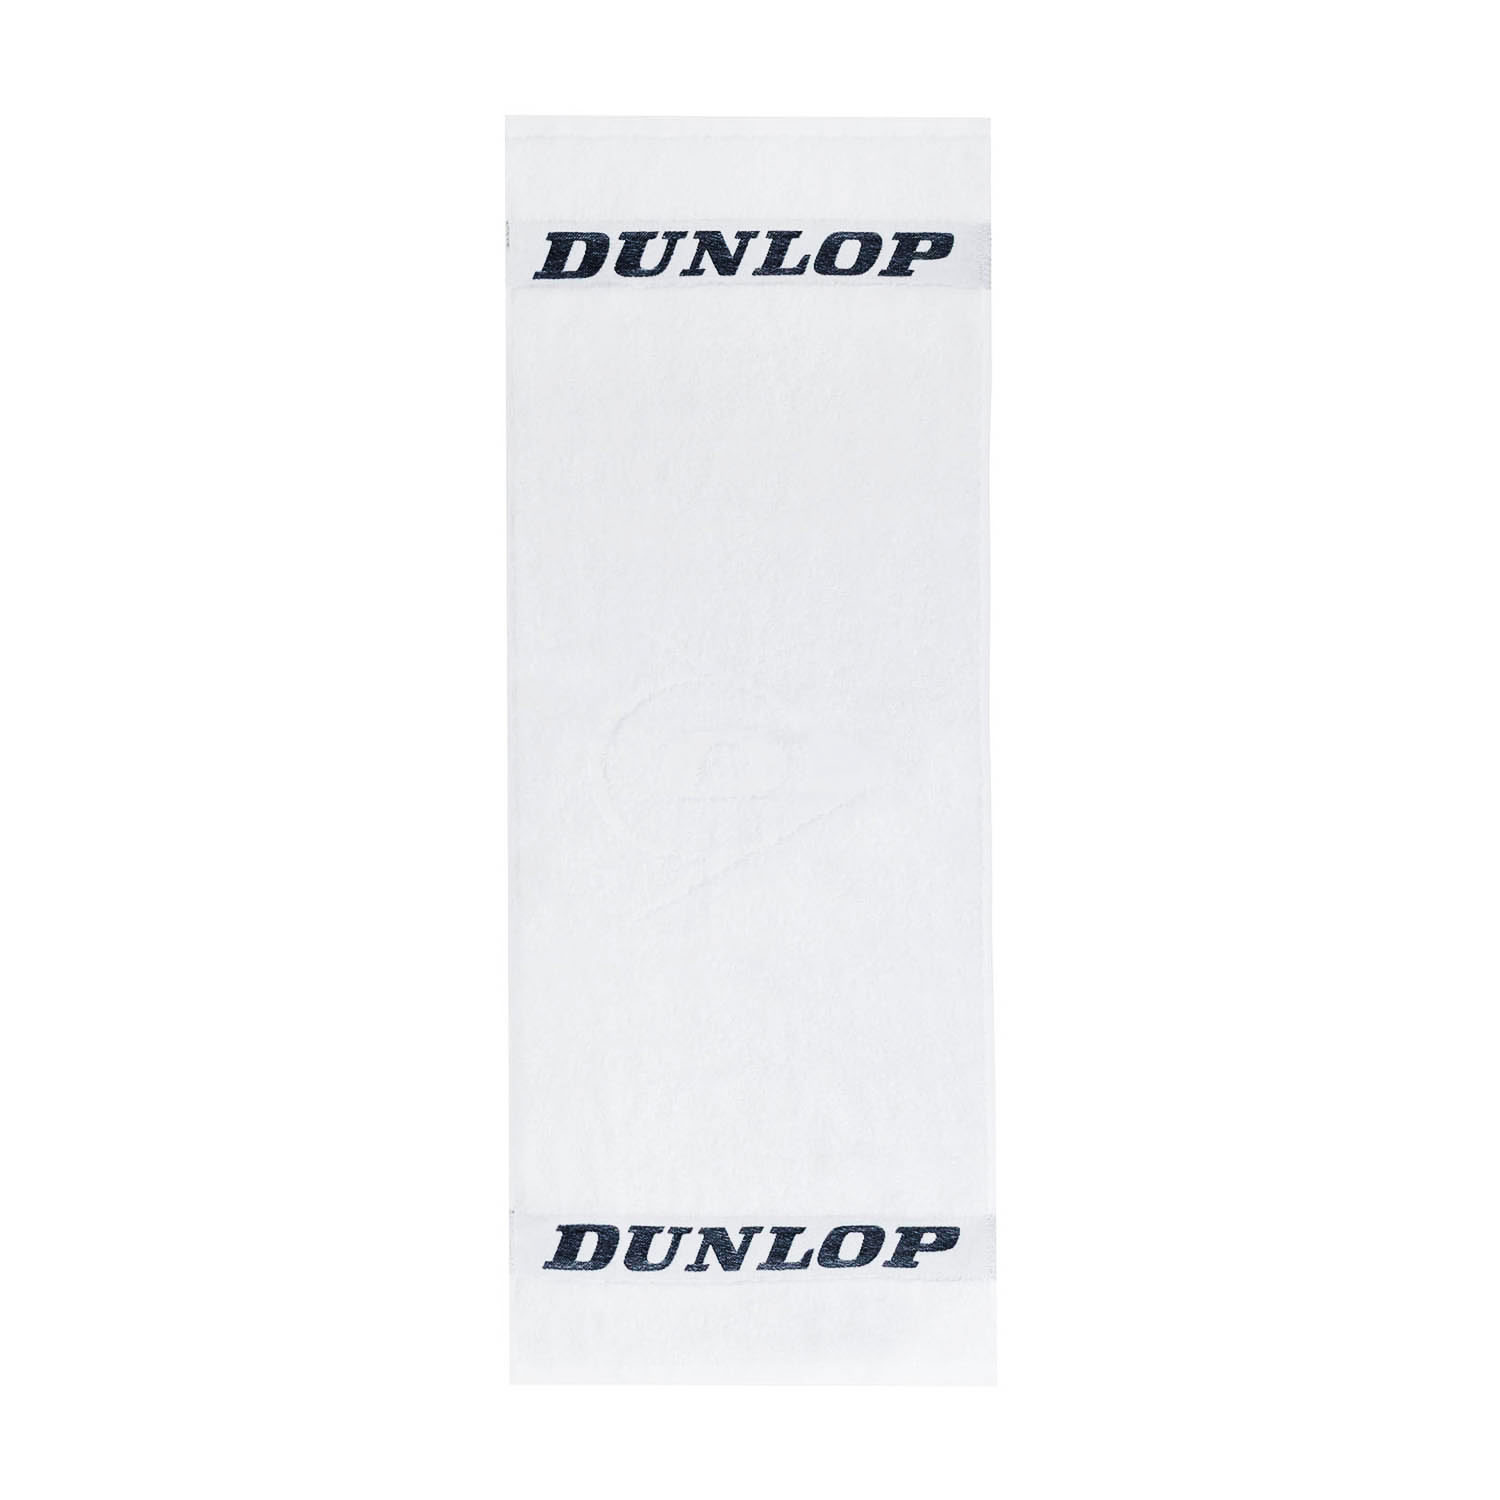 Dunlop Logo Hand Towel - White/Black